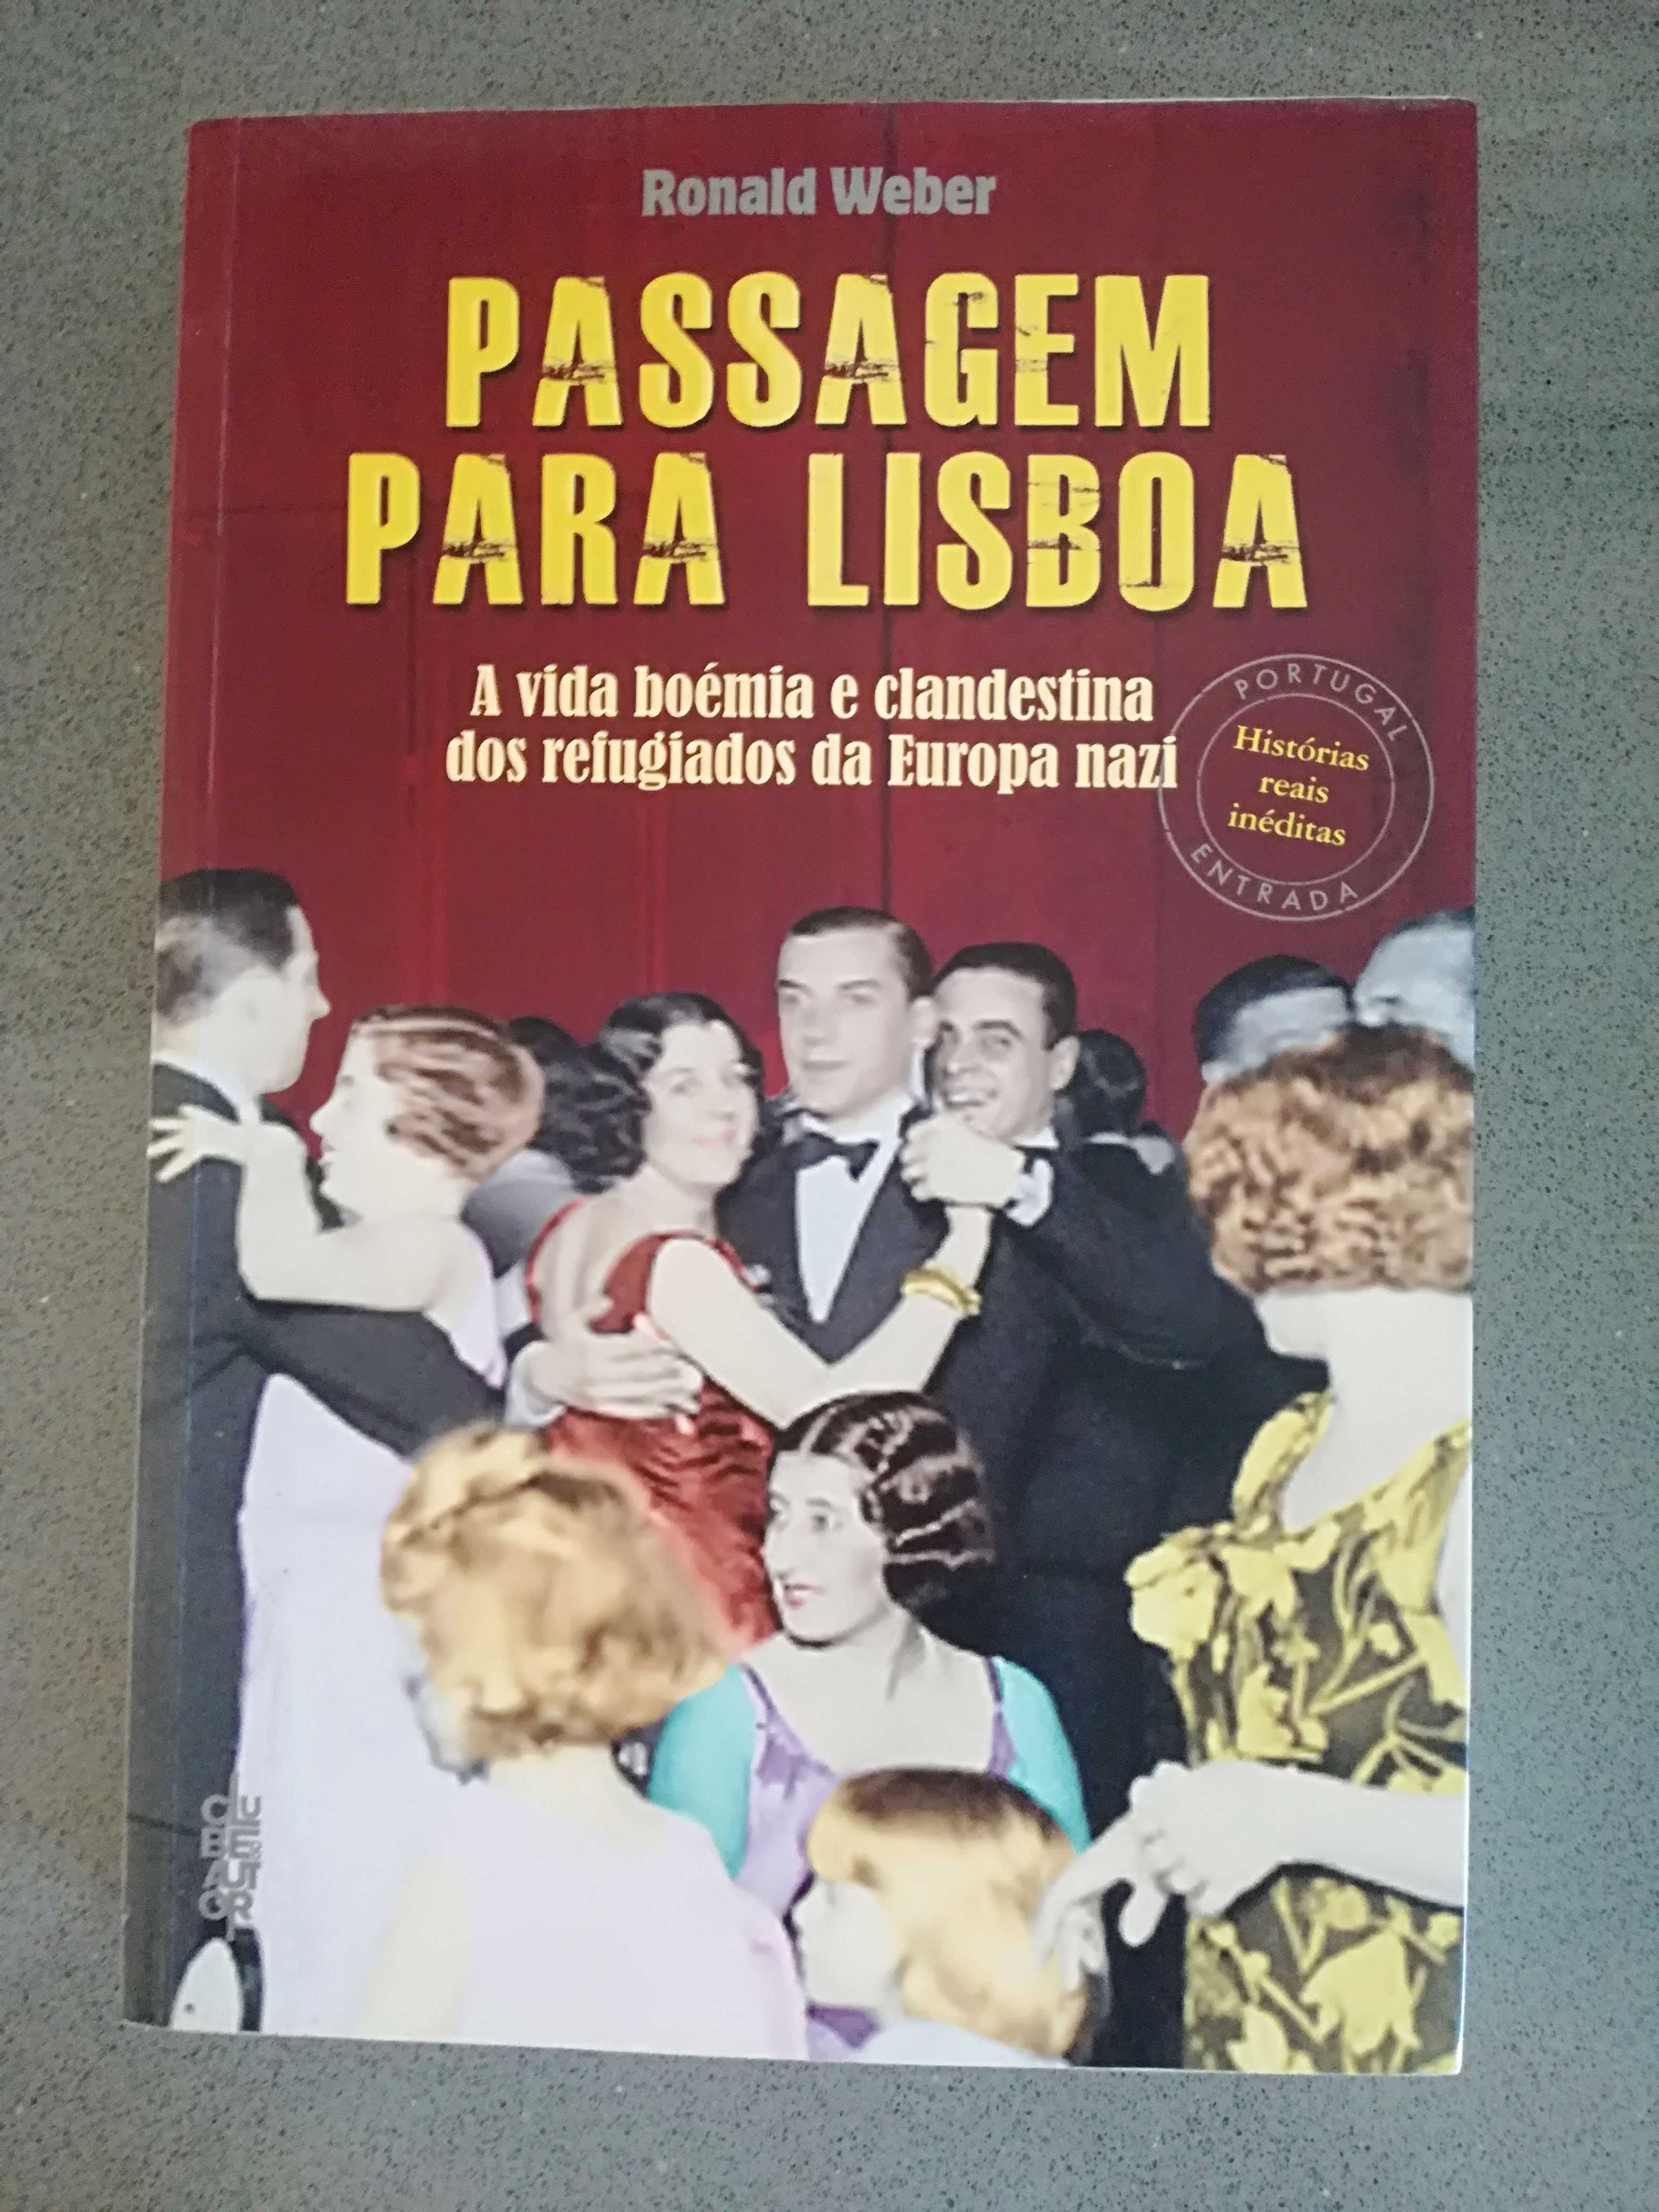 Ronald Weber - Passagem para Lisboa (PORTES GRATIS)